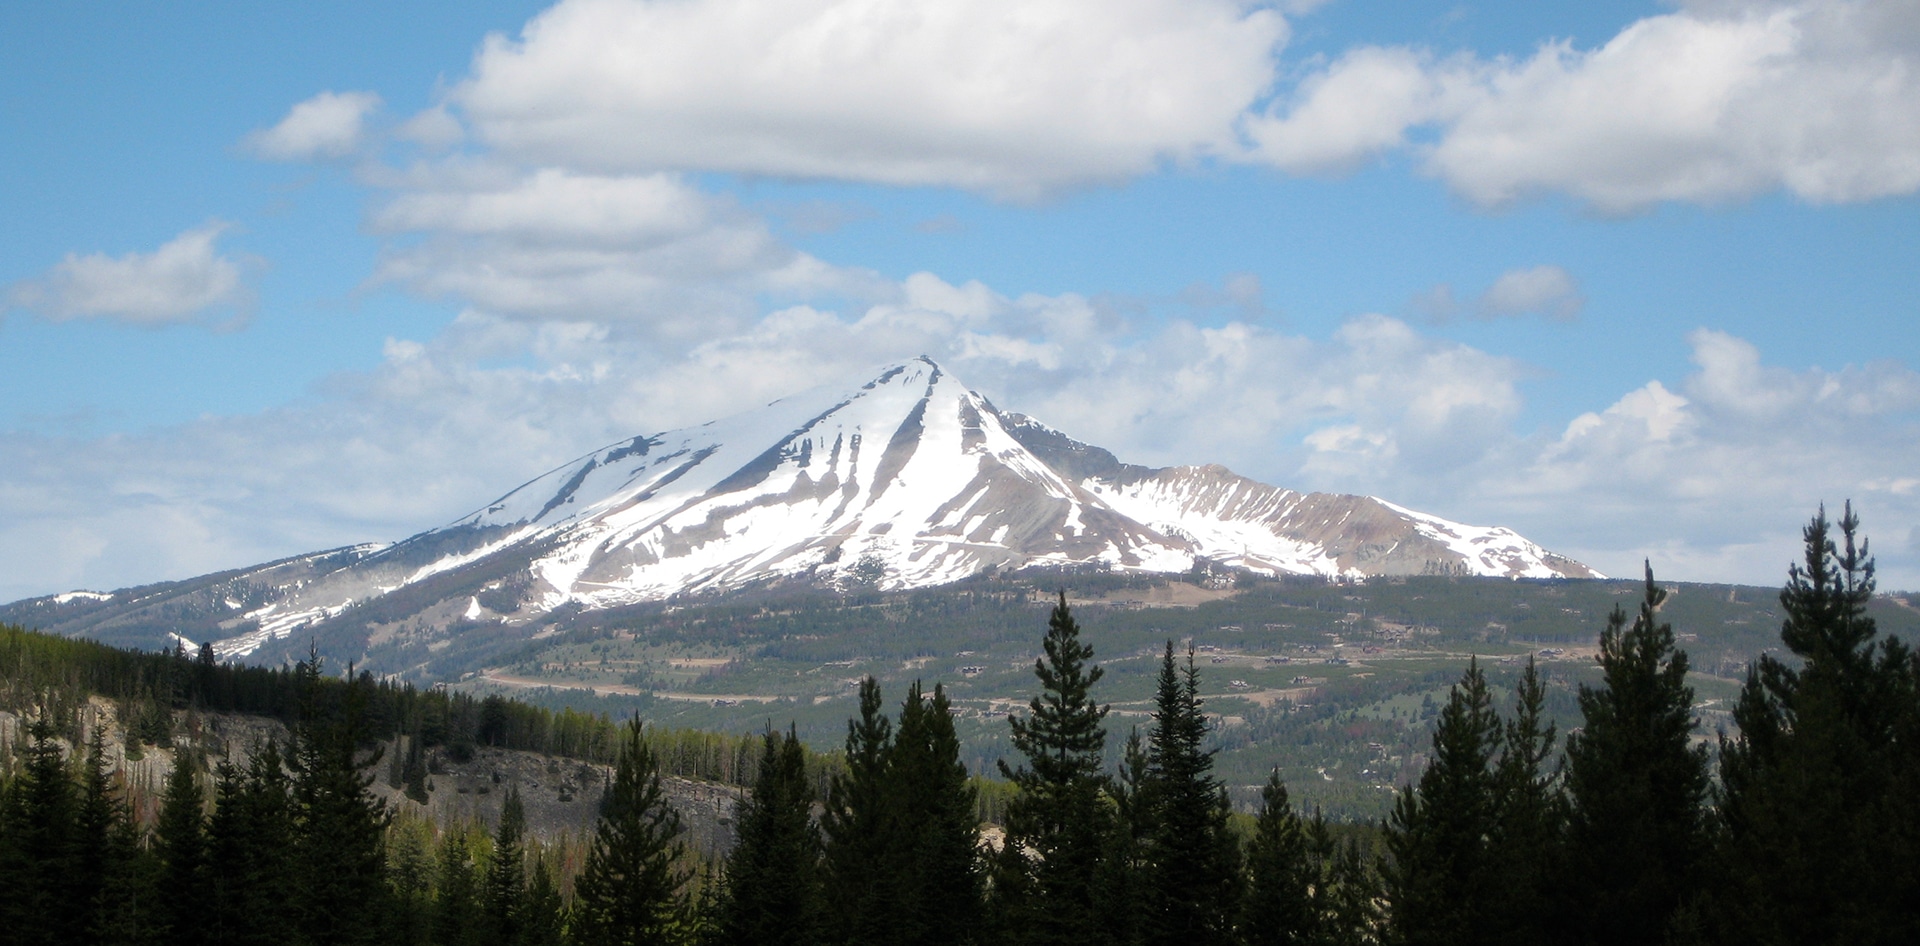 Big Sky mountain in Montana